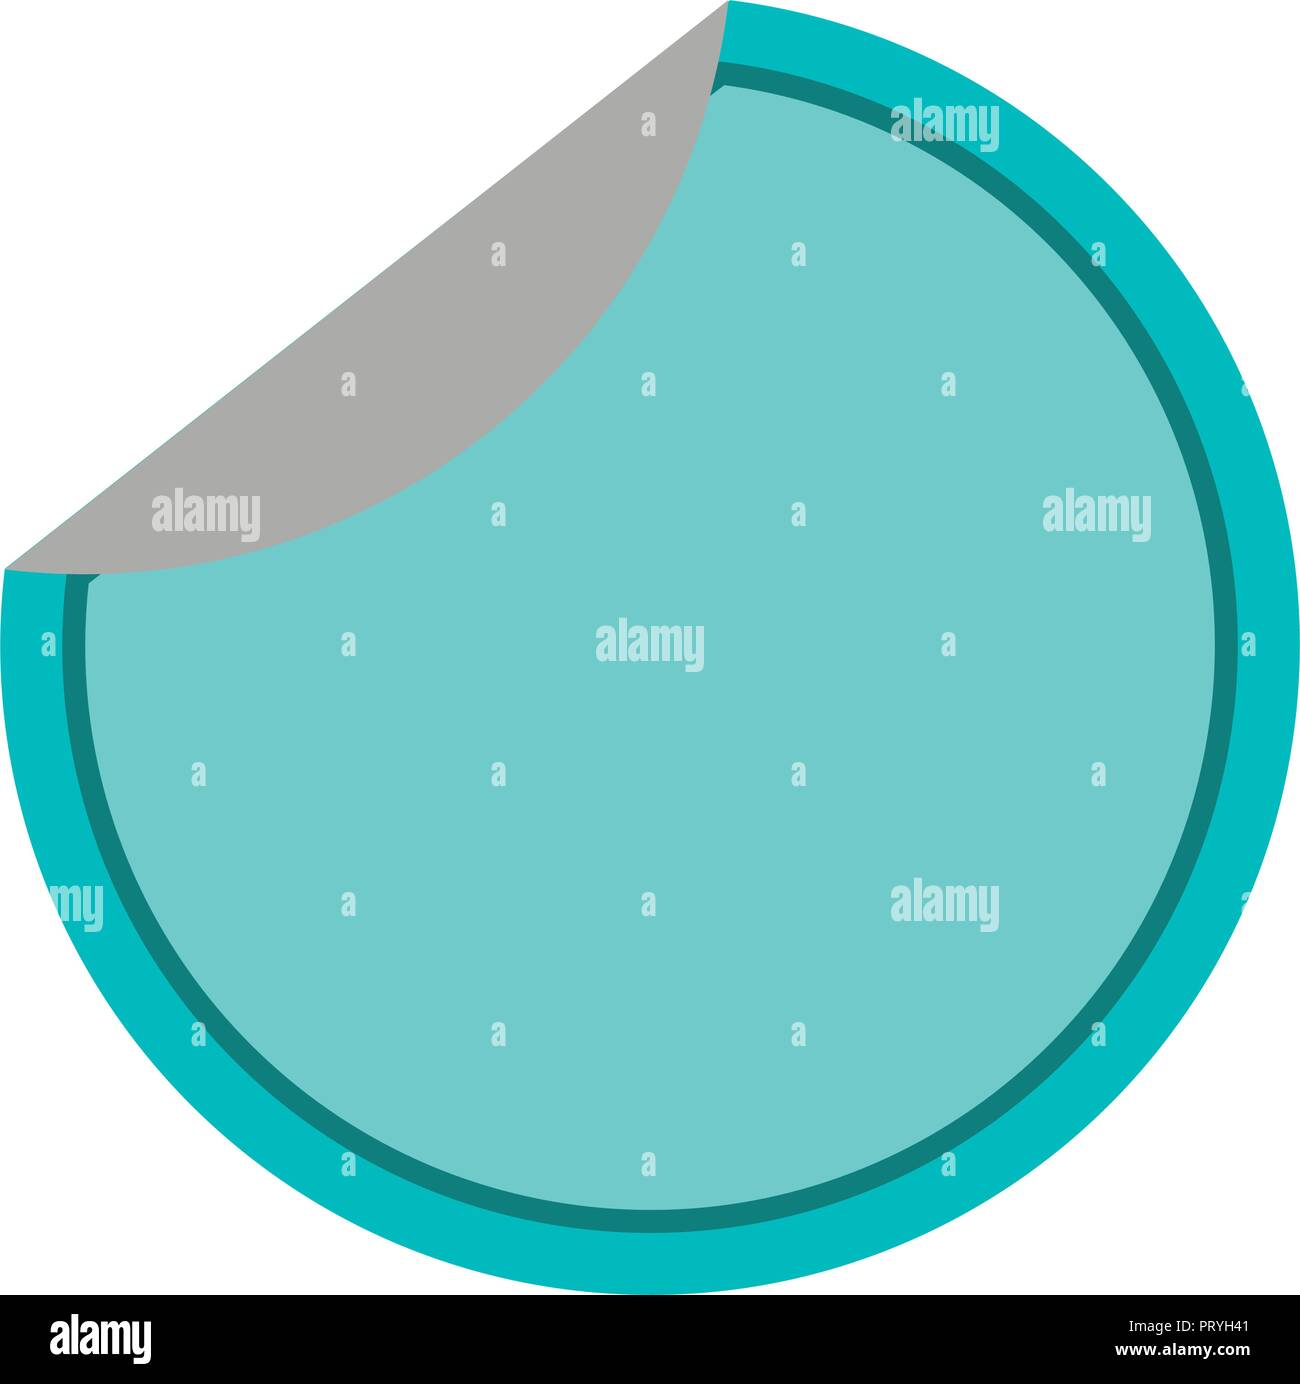 circular sticker isolated icon vector illustration design Stock Vector